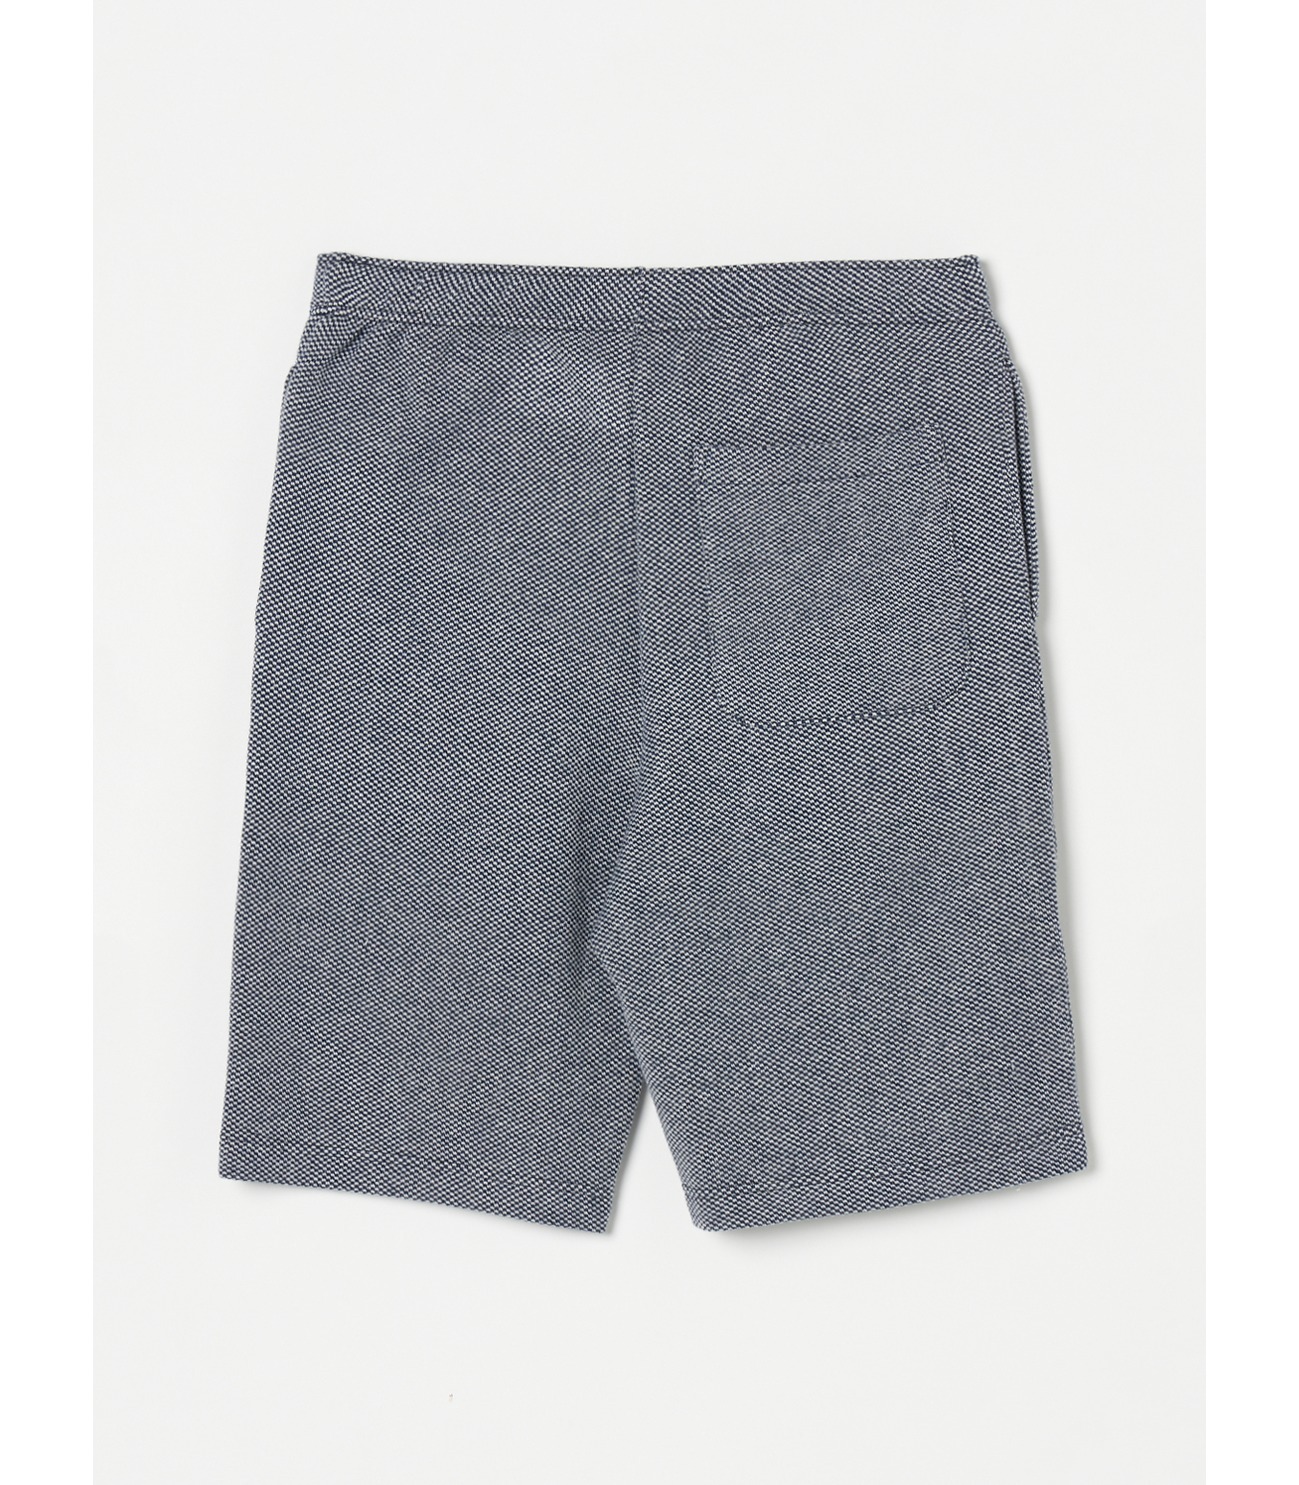 Men's inlay shorts 詳細画像 grey 1